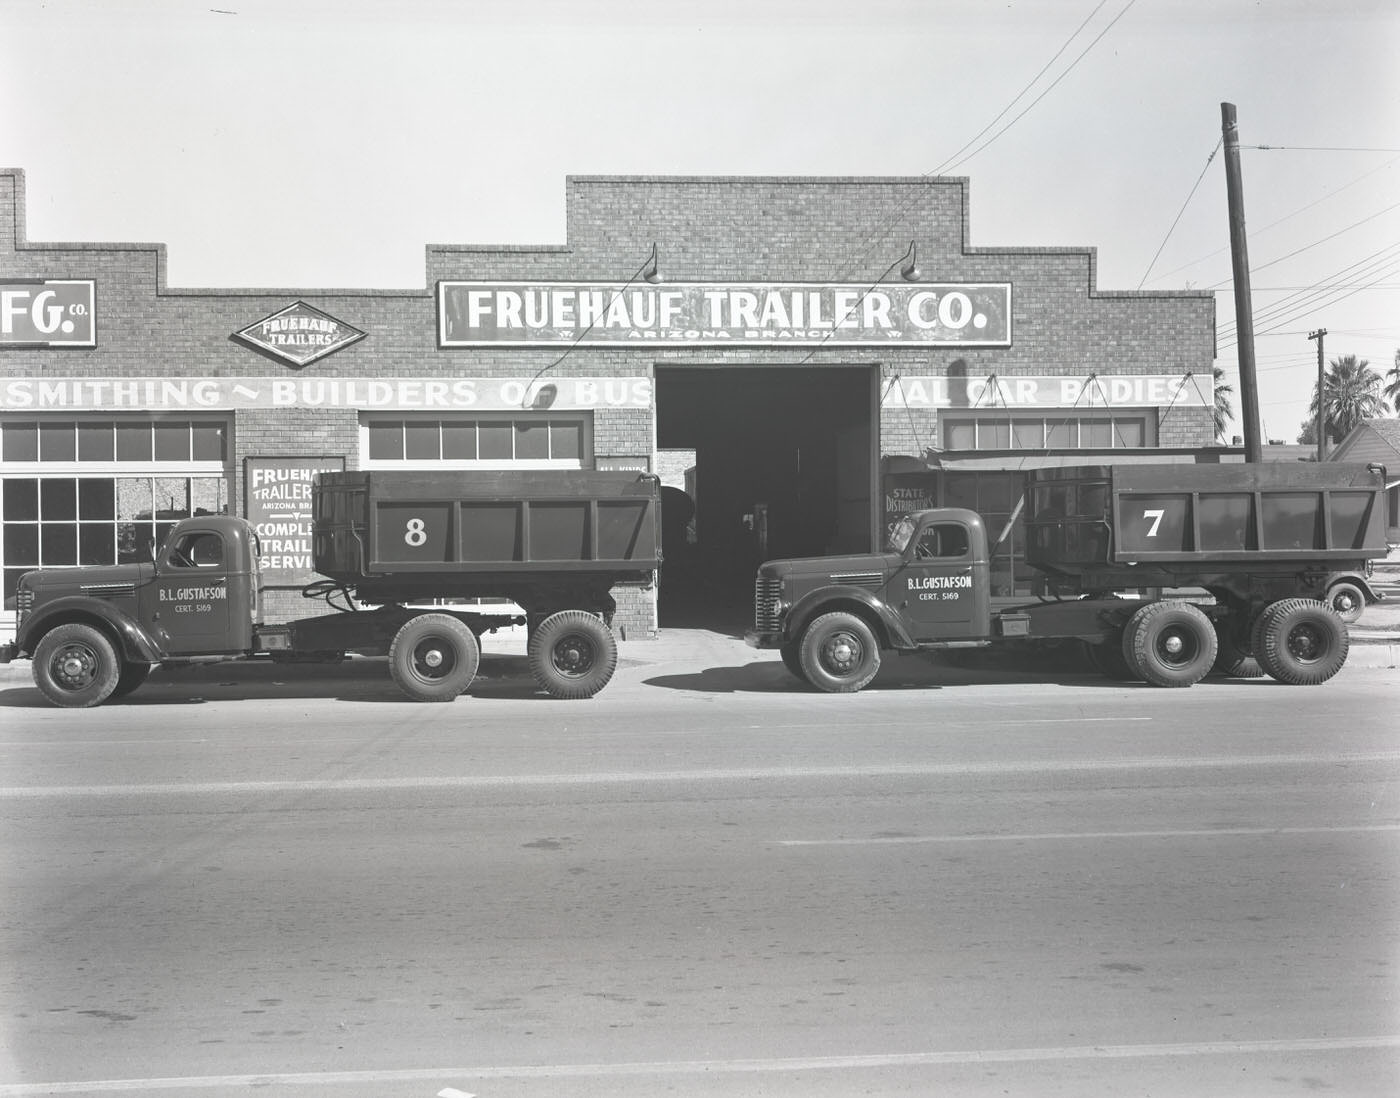 Fruehauf Trailer Co. Building Exterior and Trucks, 1941